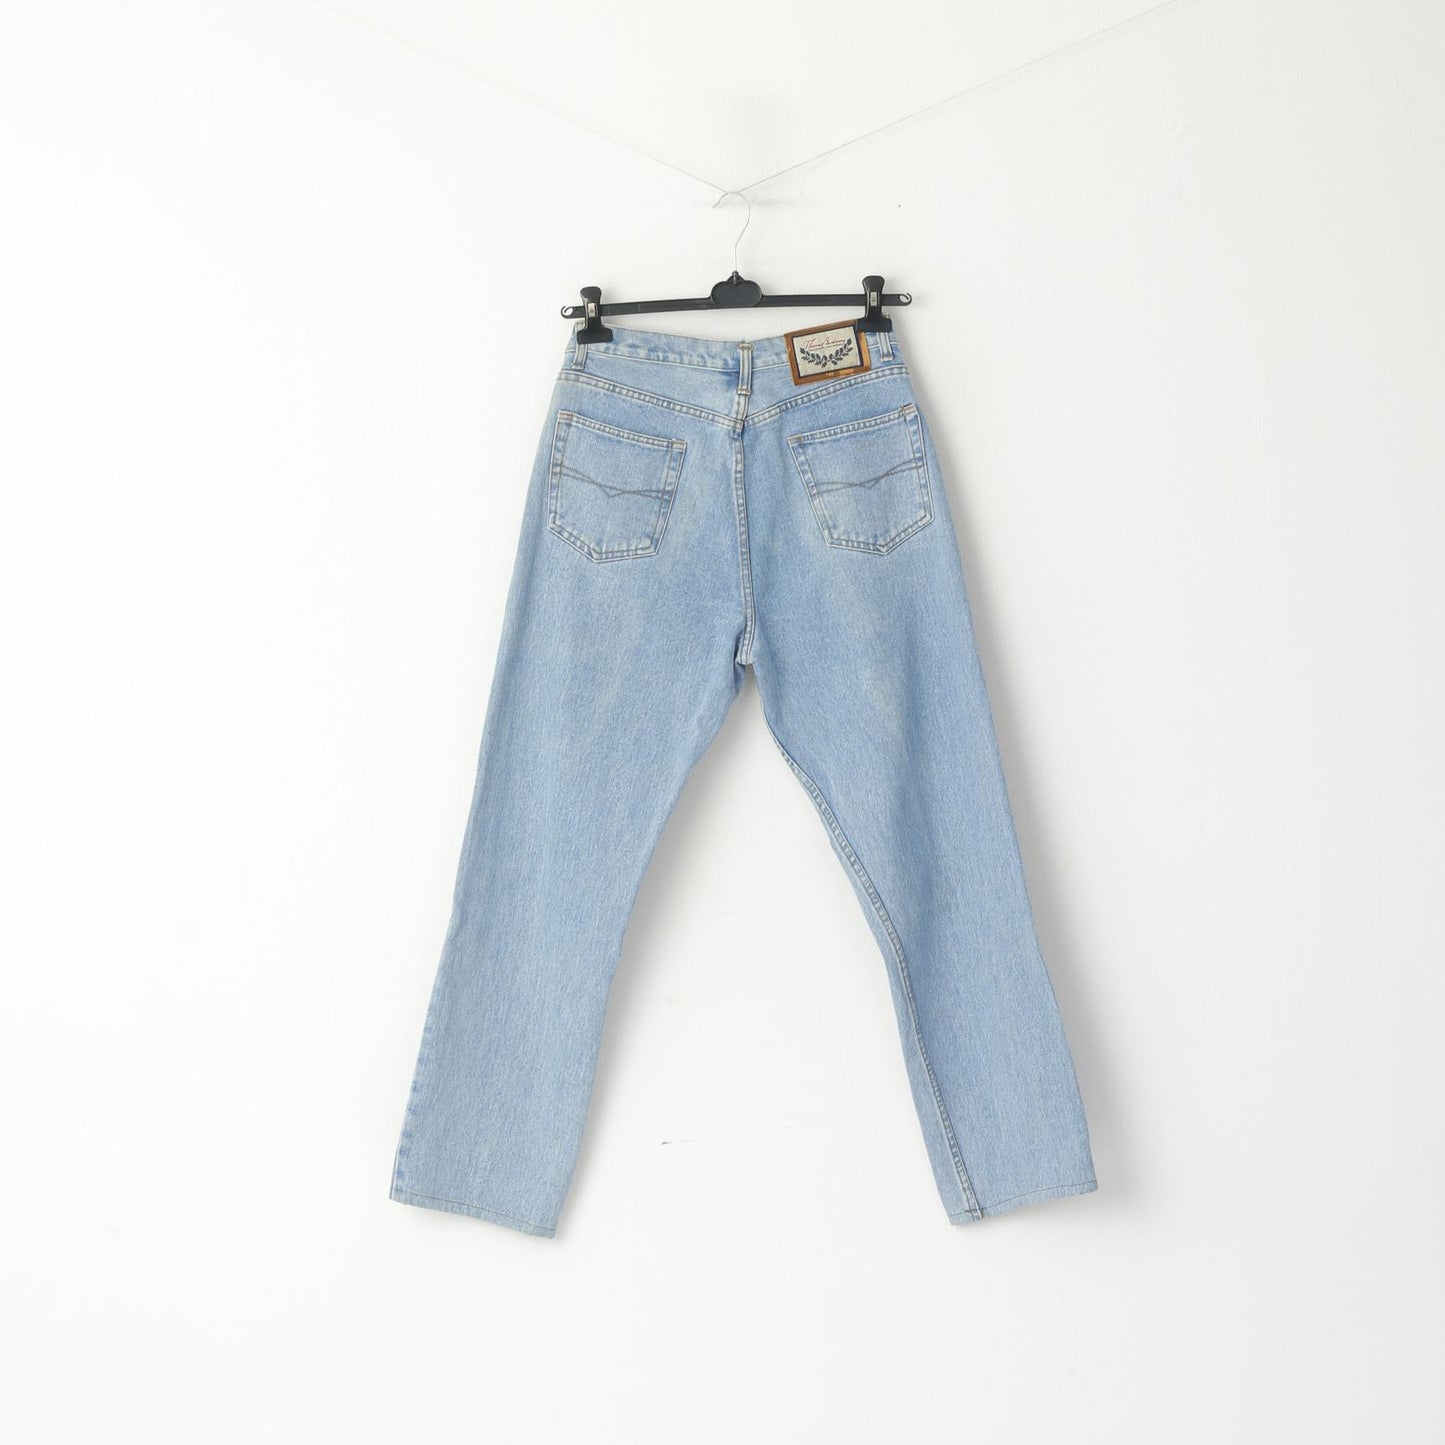 Thomas Burberry Women 34 Trousers Vintage Jeans Light Blue High Waist Pants